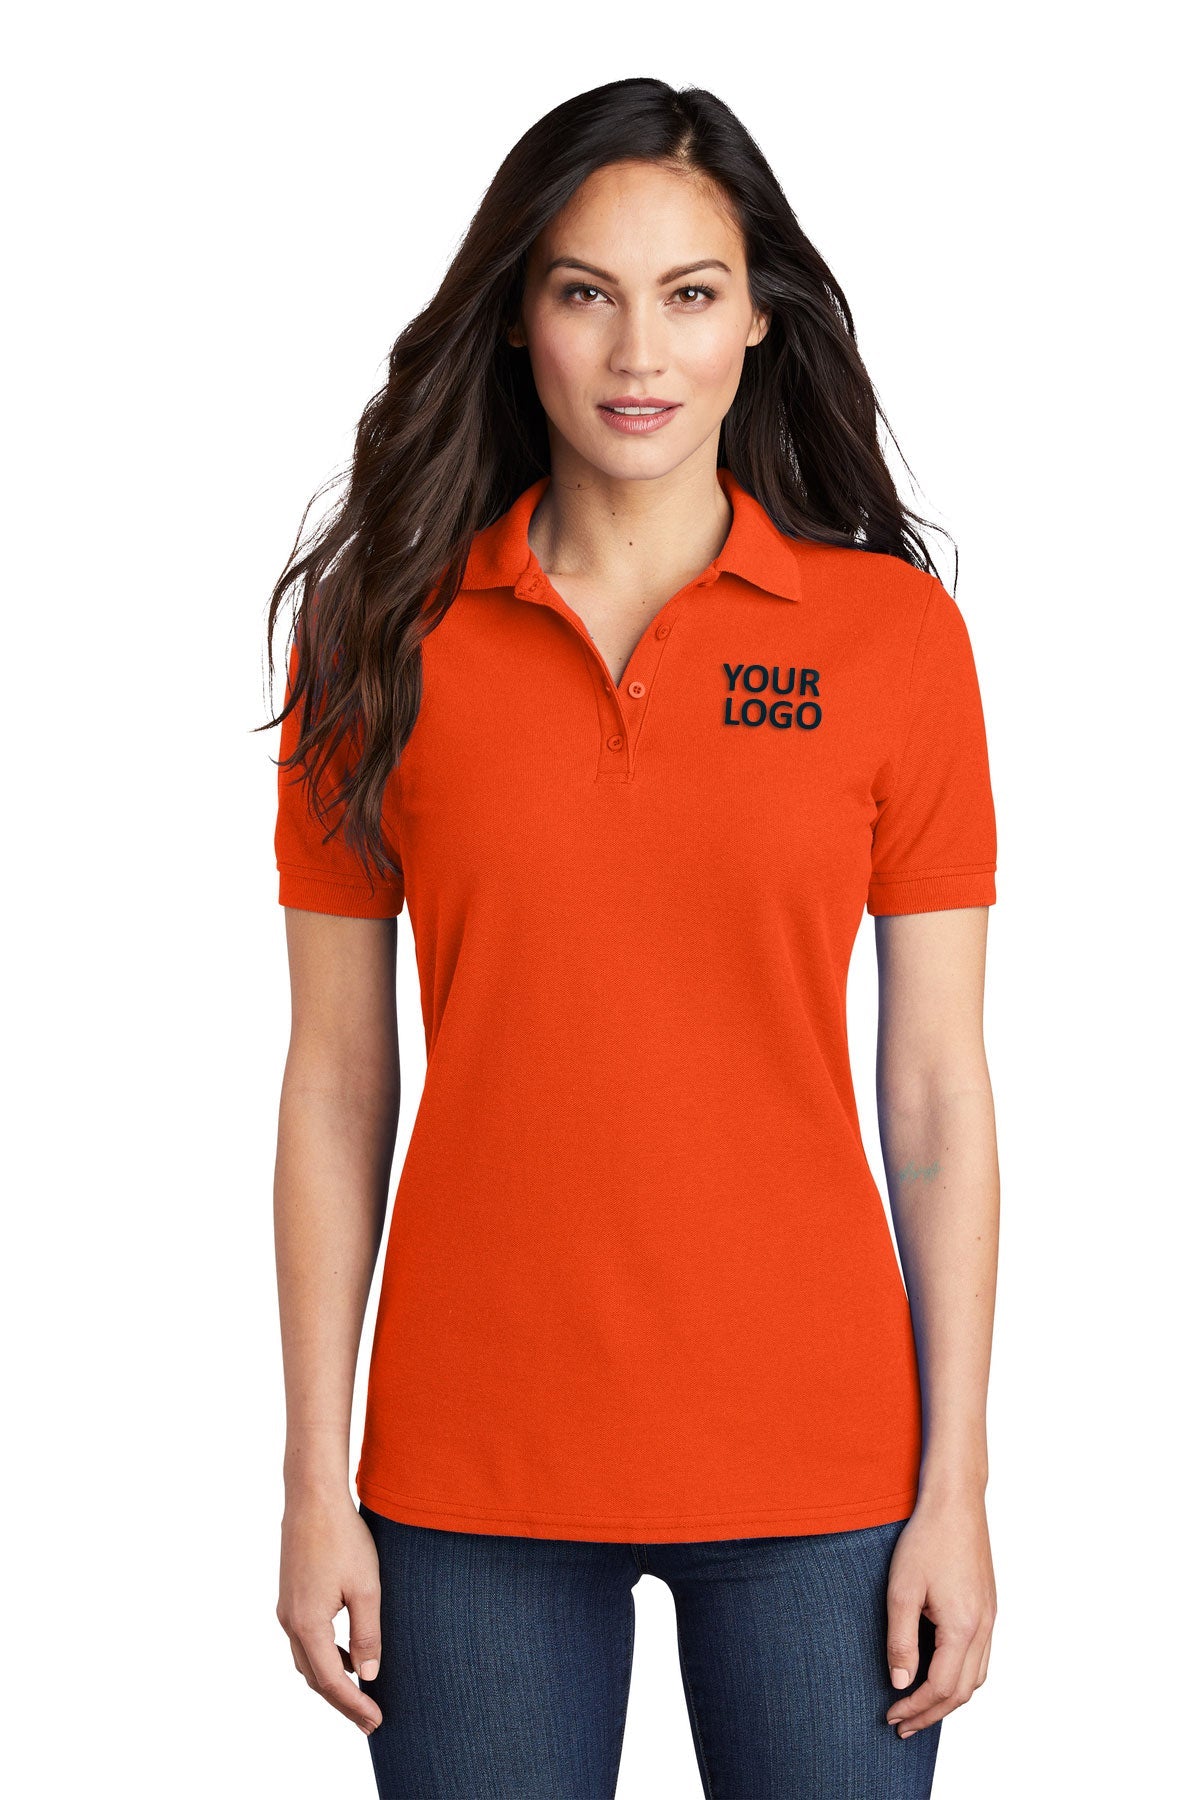 Port & Company Ladies Core Blend Pique Polo in Orange, with company logo